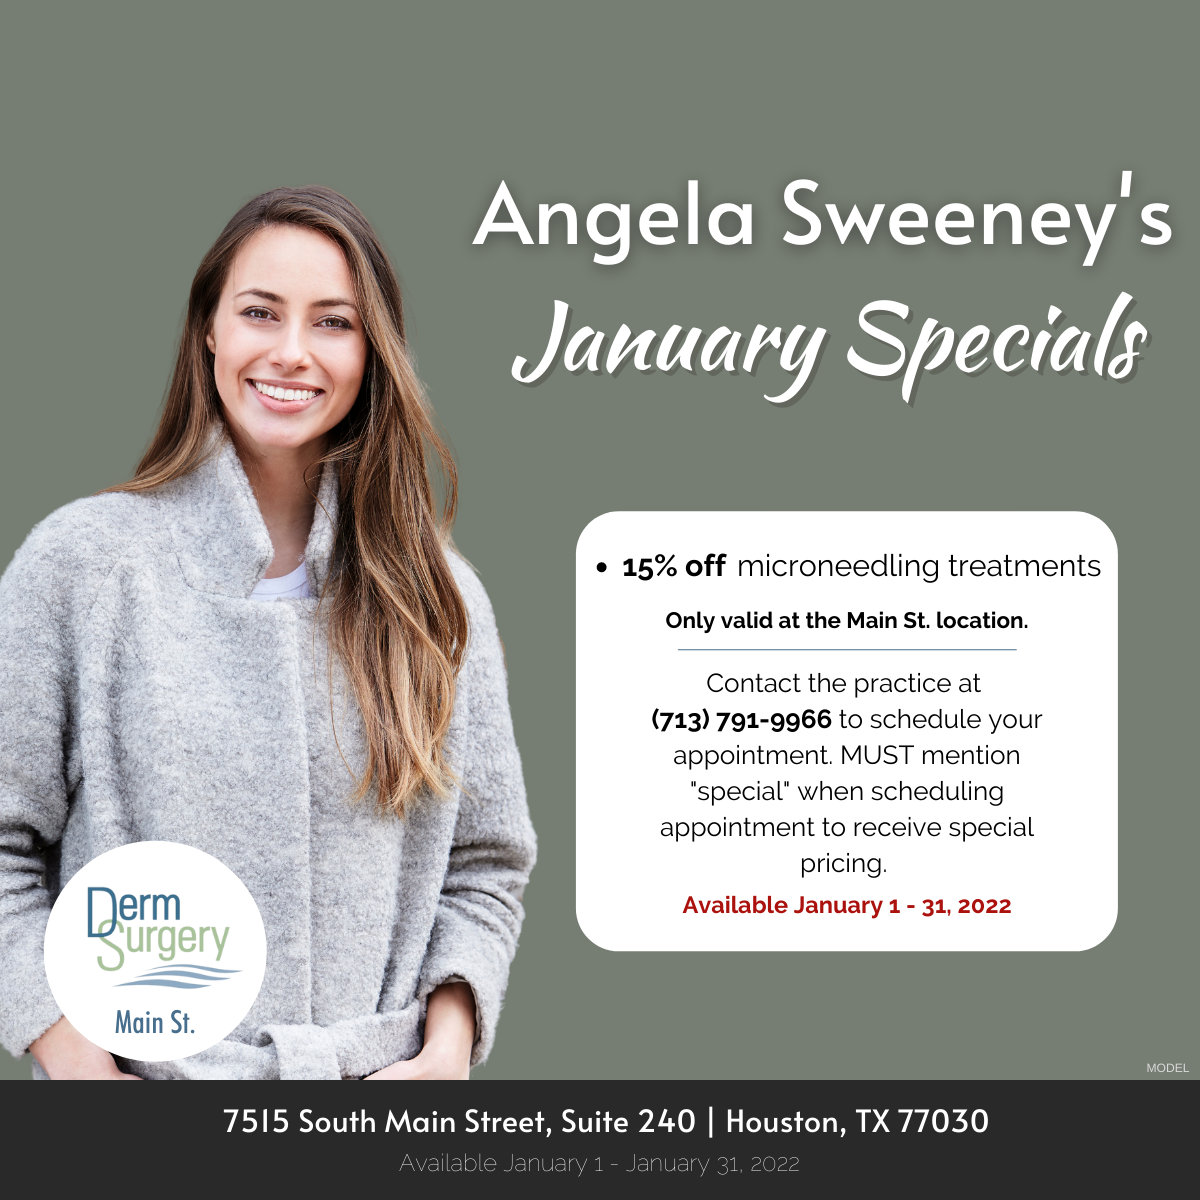 Angela Sweeney's January Specials